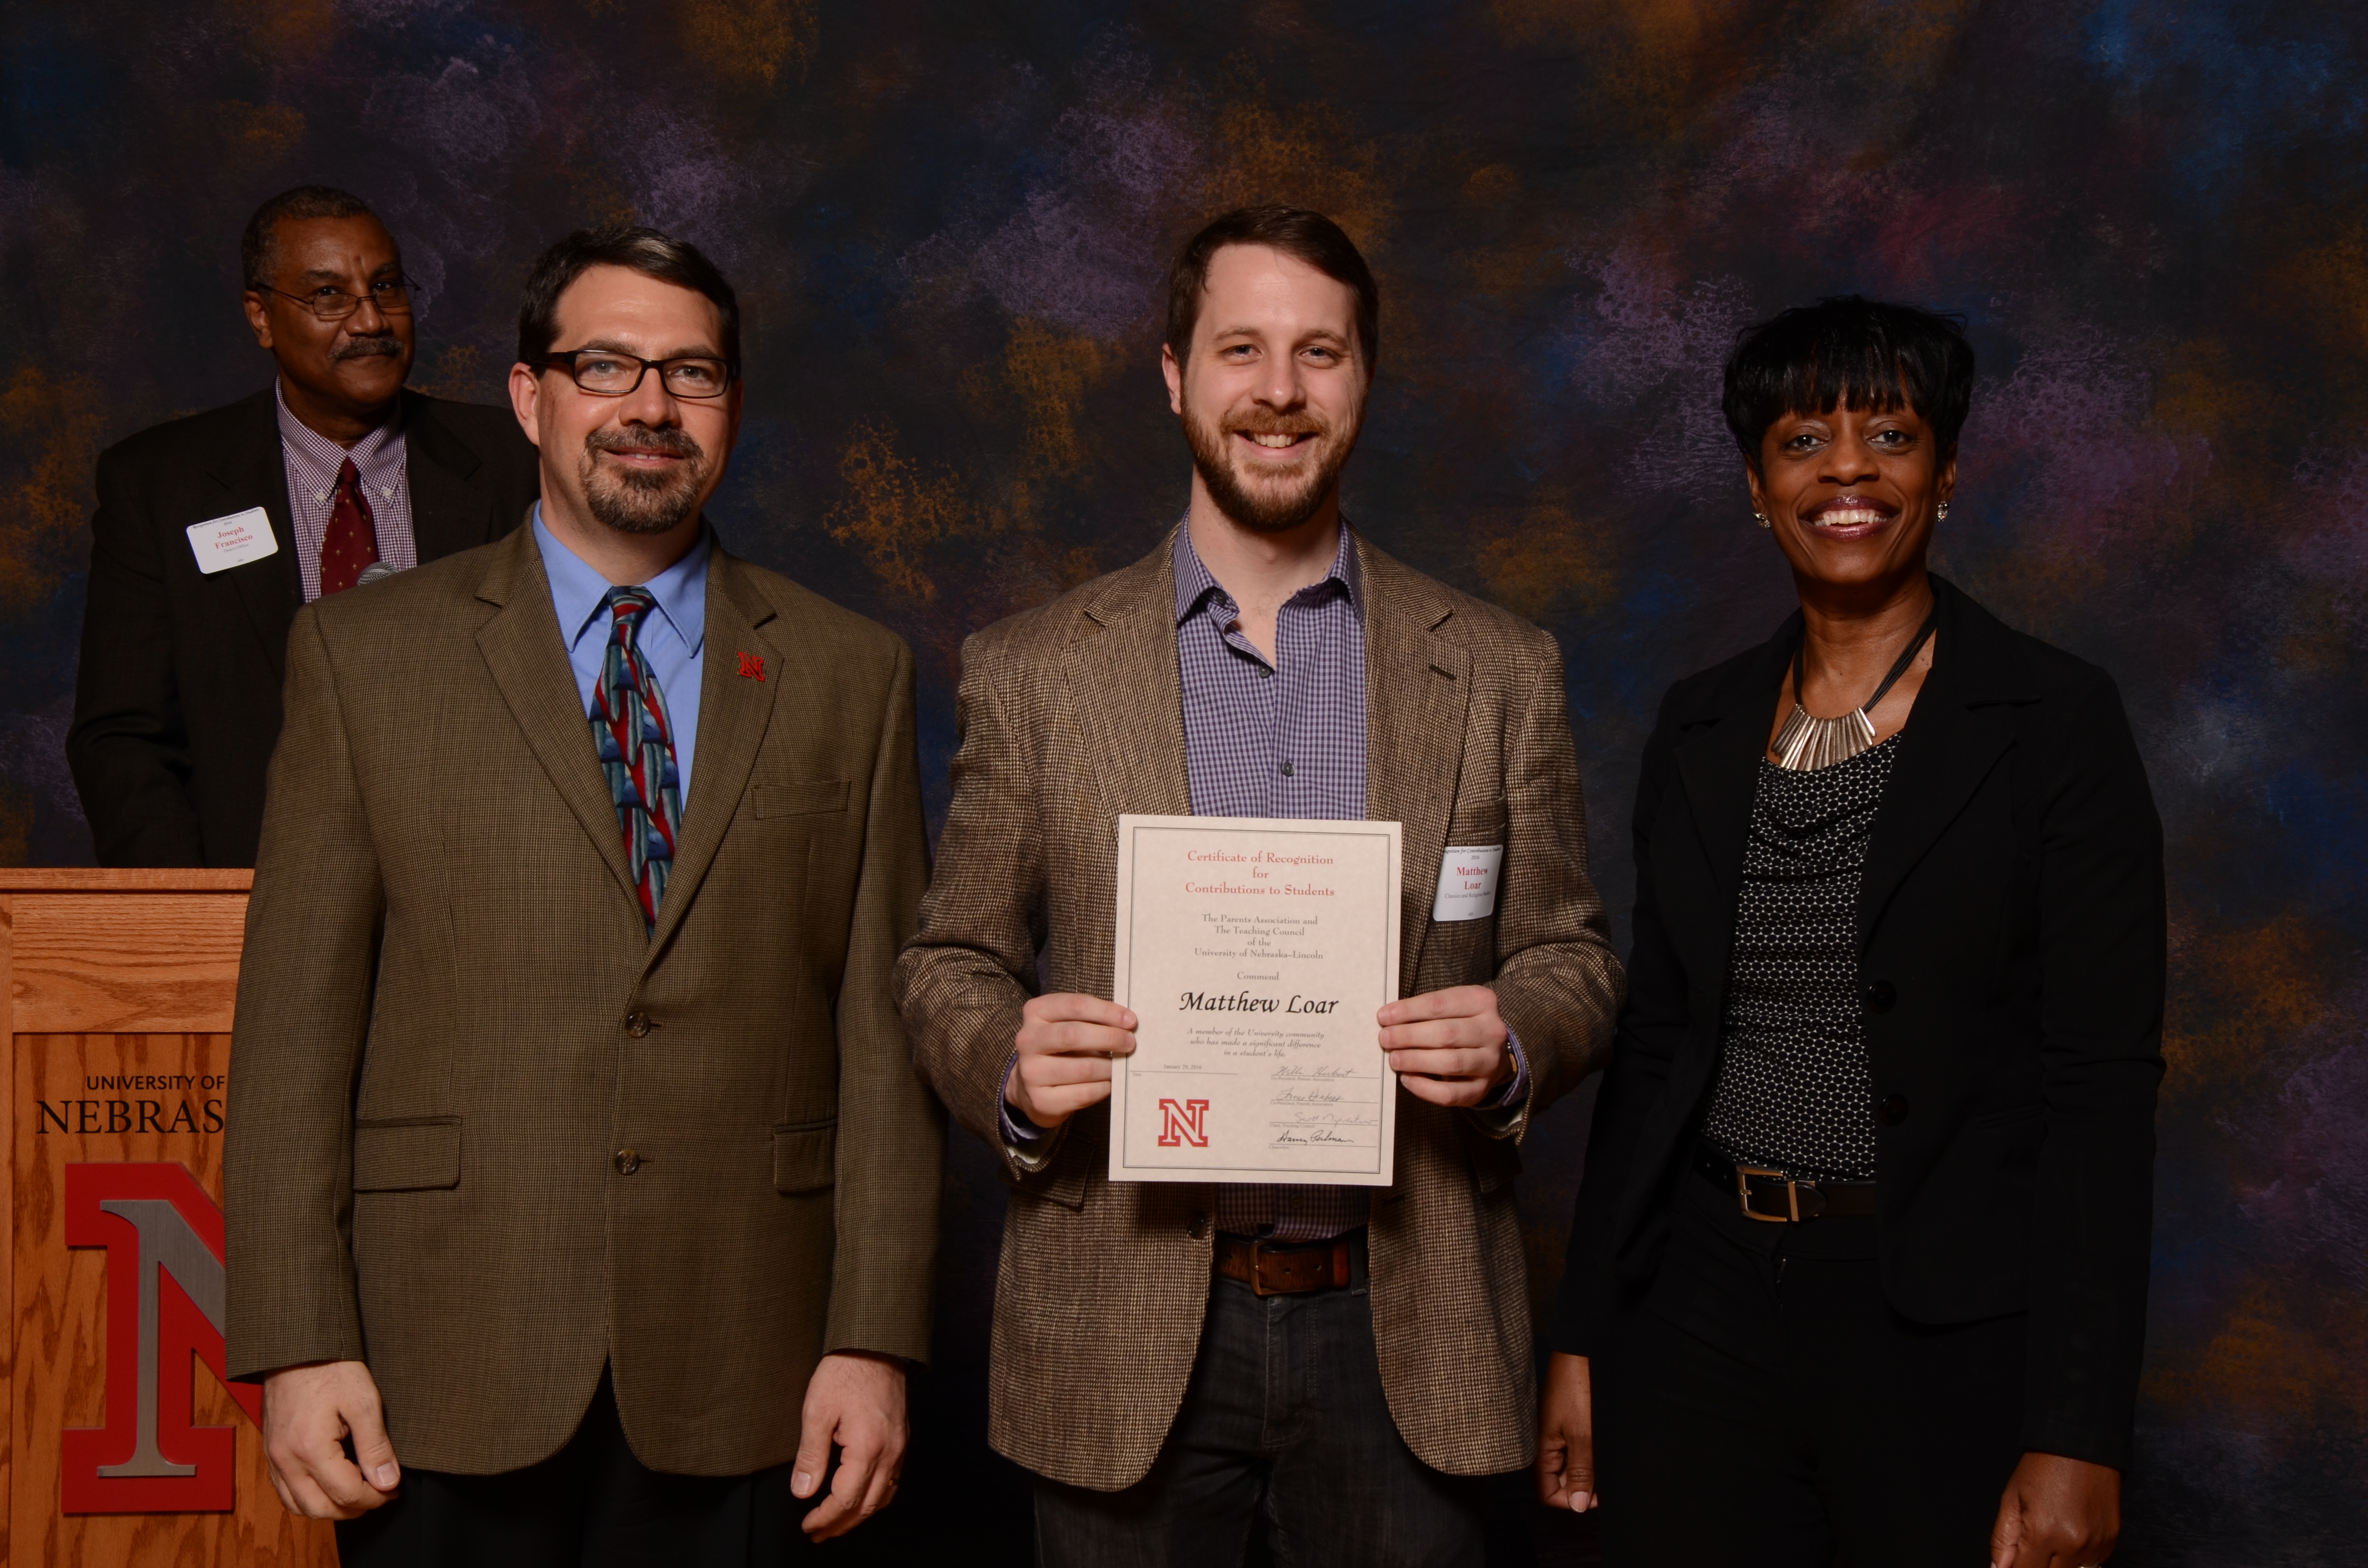 Photo Credit: Professor Matthew Loar receiving his award at the 2016 ceremony